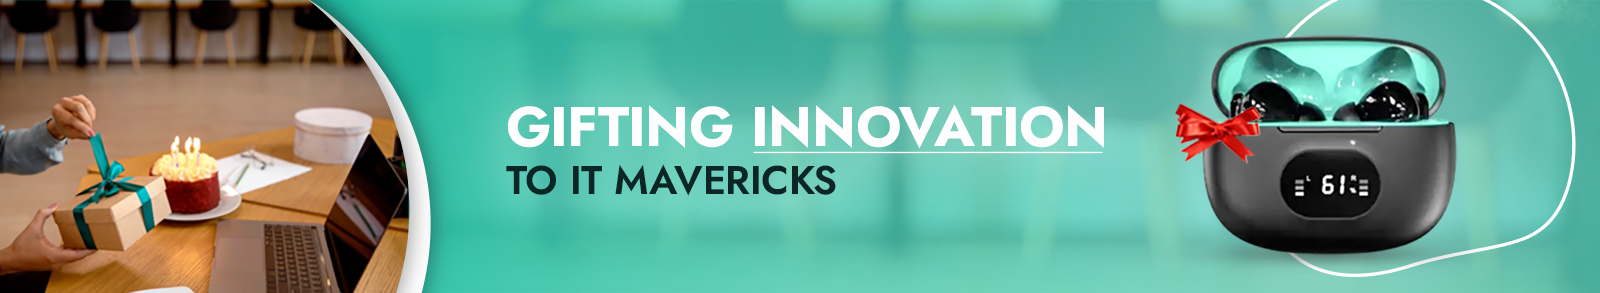 Gifting Innovation to IT Mavericks_1600